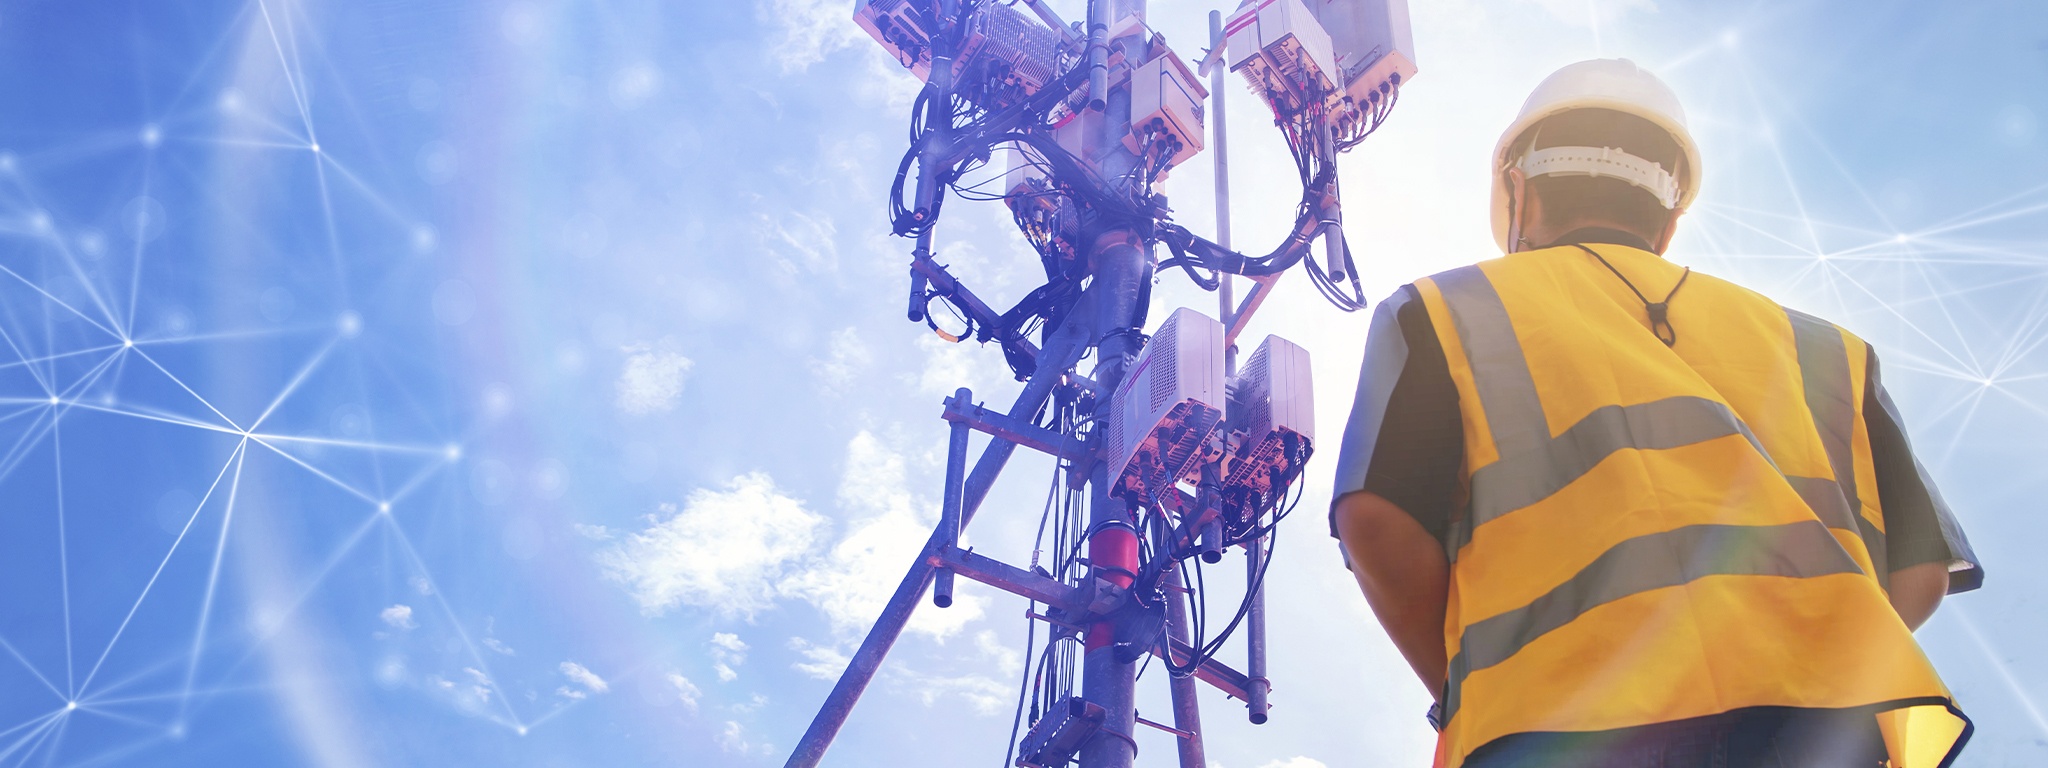 tampak belakang seorang teknisi berhelm yang bekerja di lapangan dengan menara telekomunikasi di hadapannya